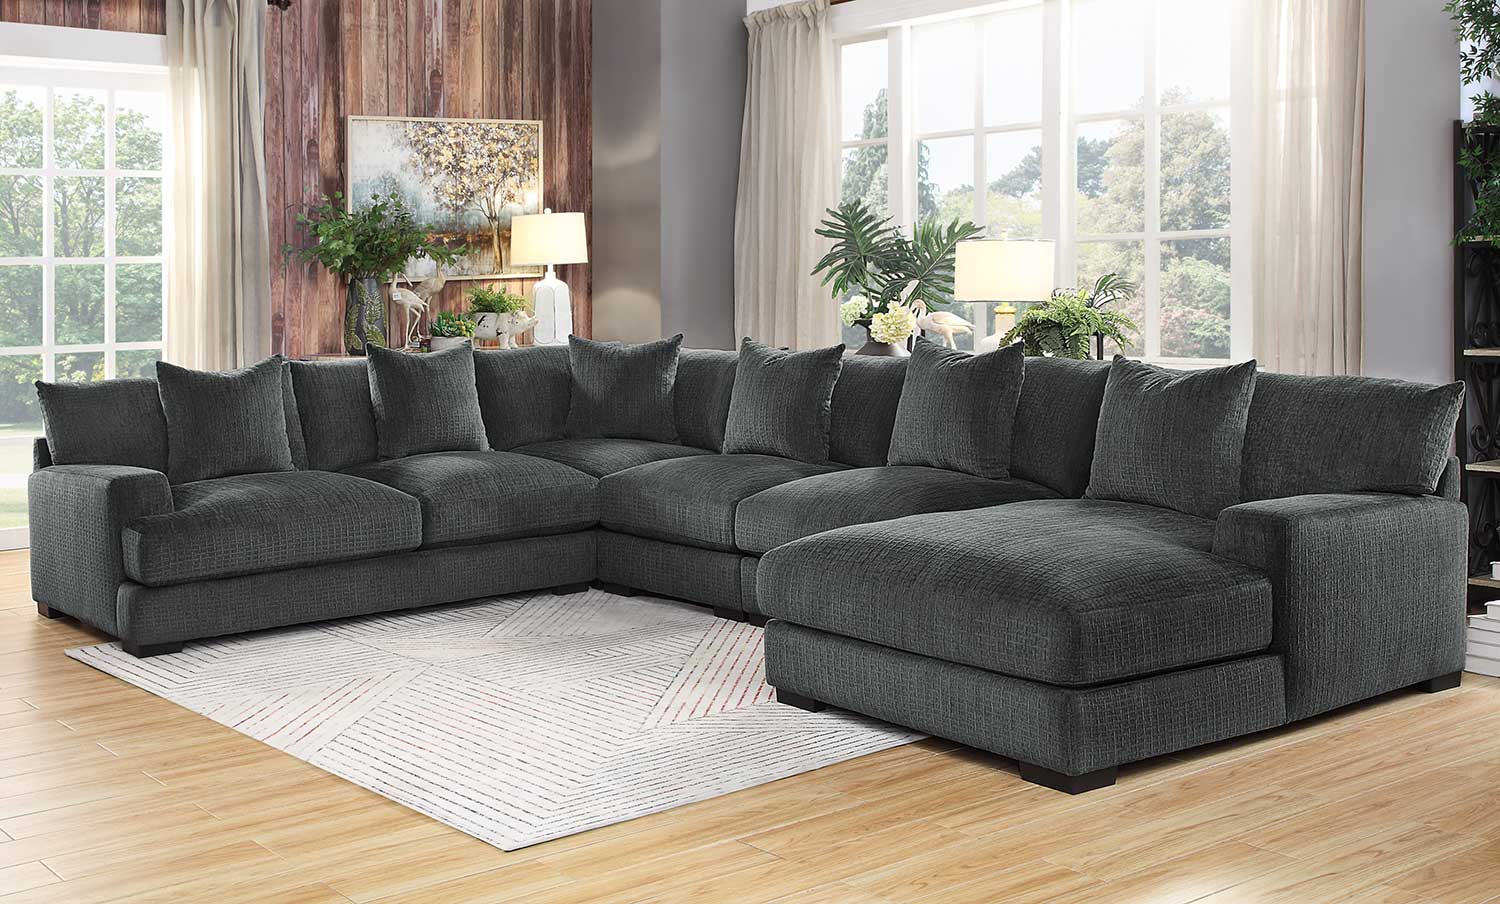 Homelegance Worchester Sectional Sofa Set - Dark gray